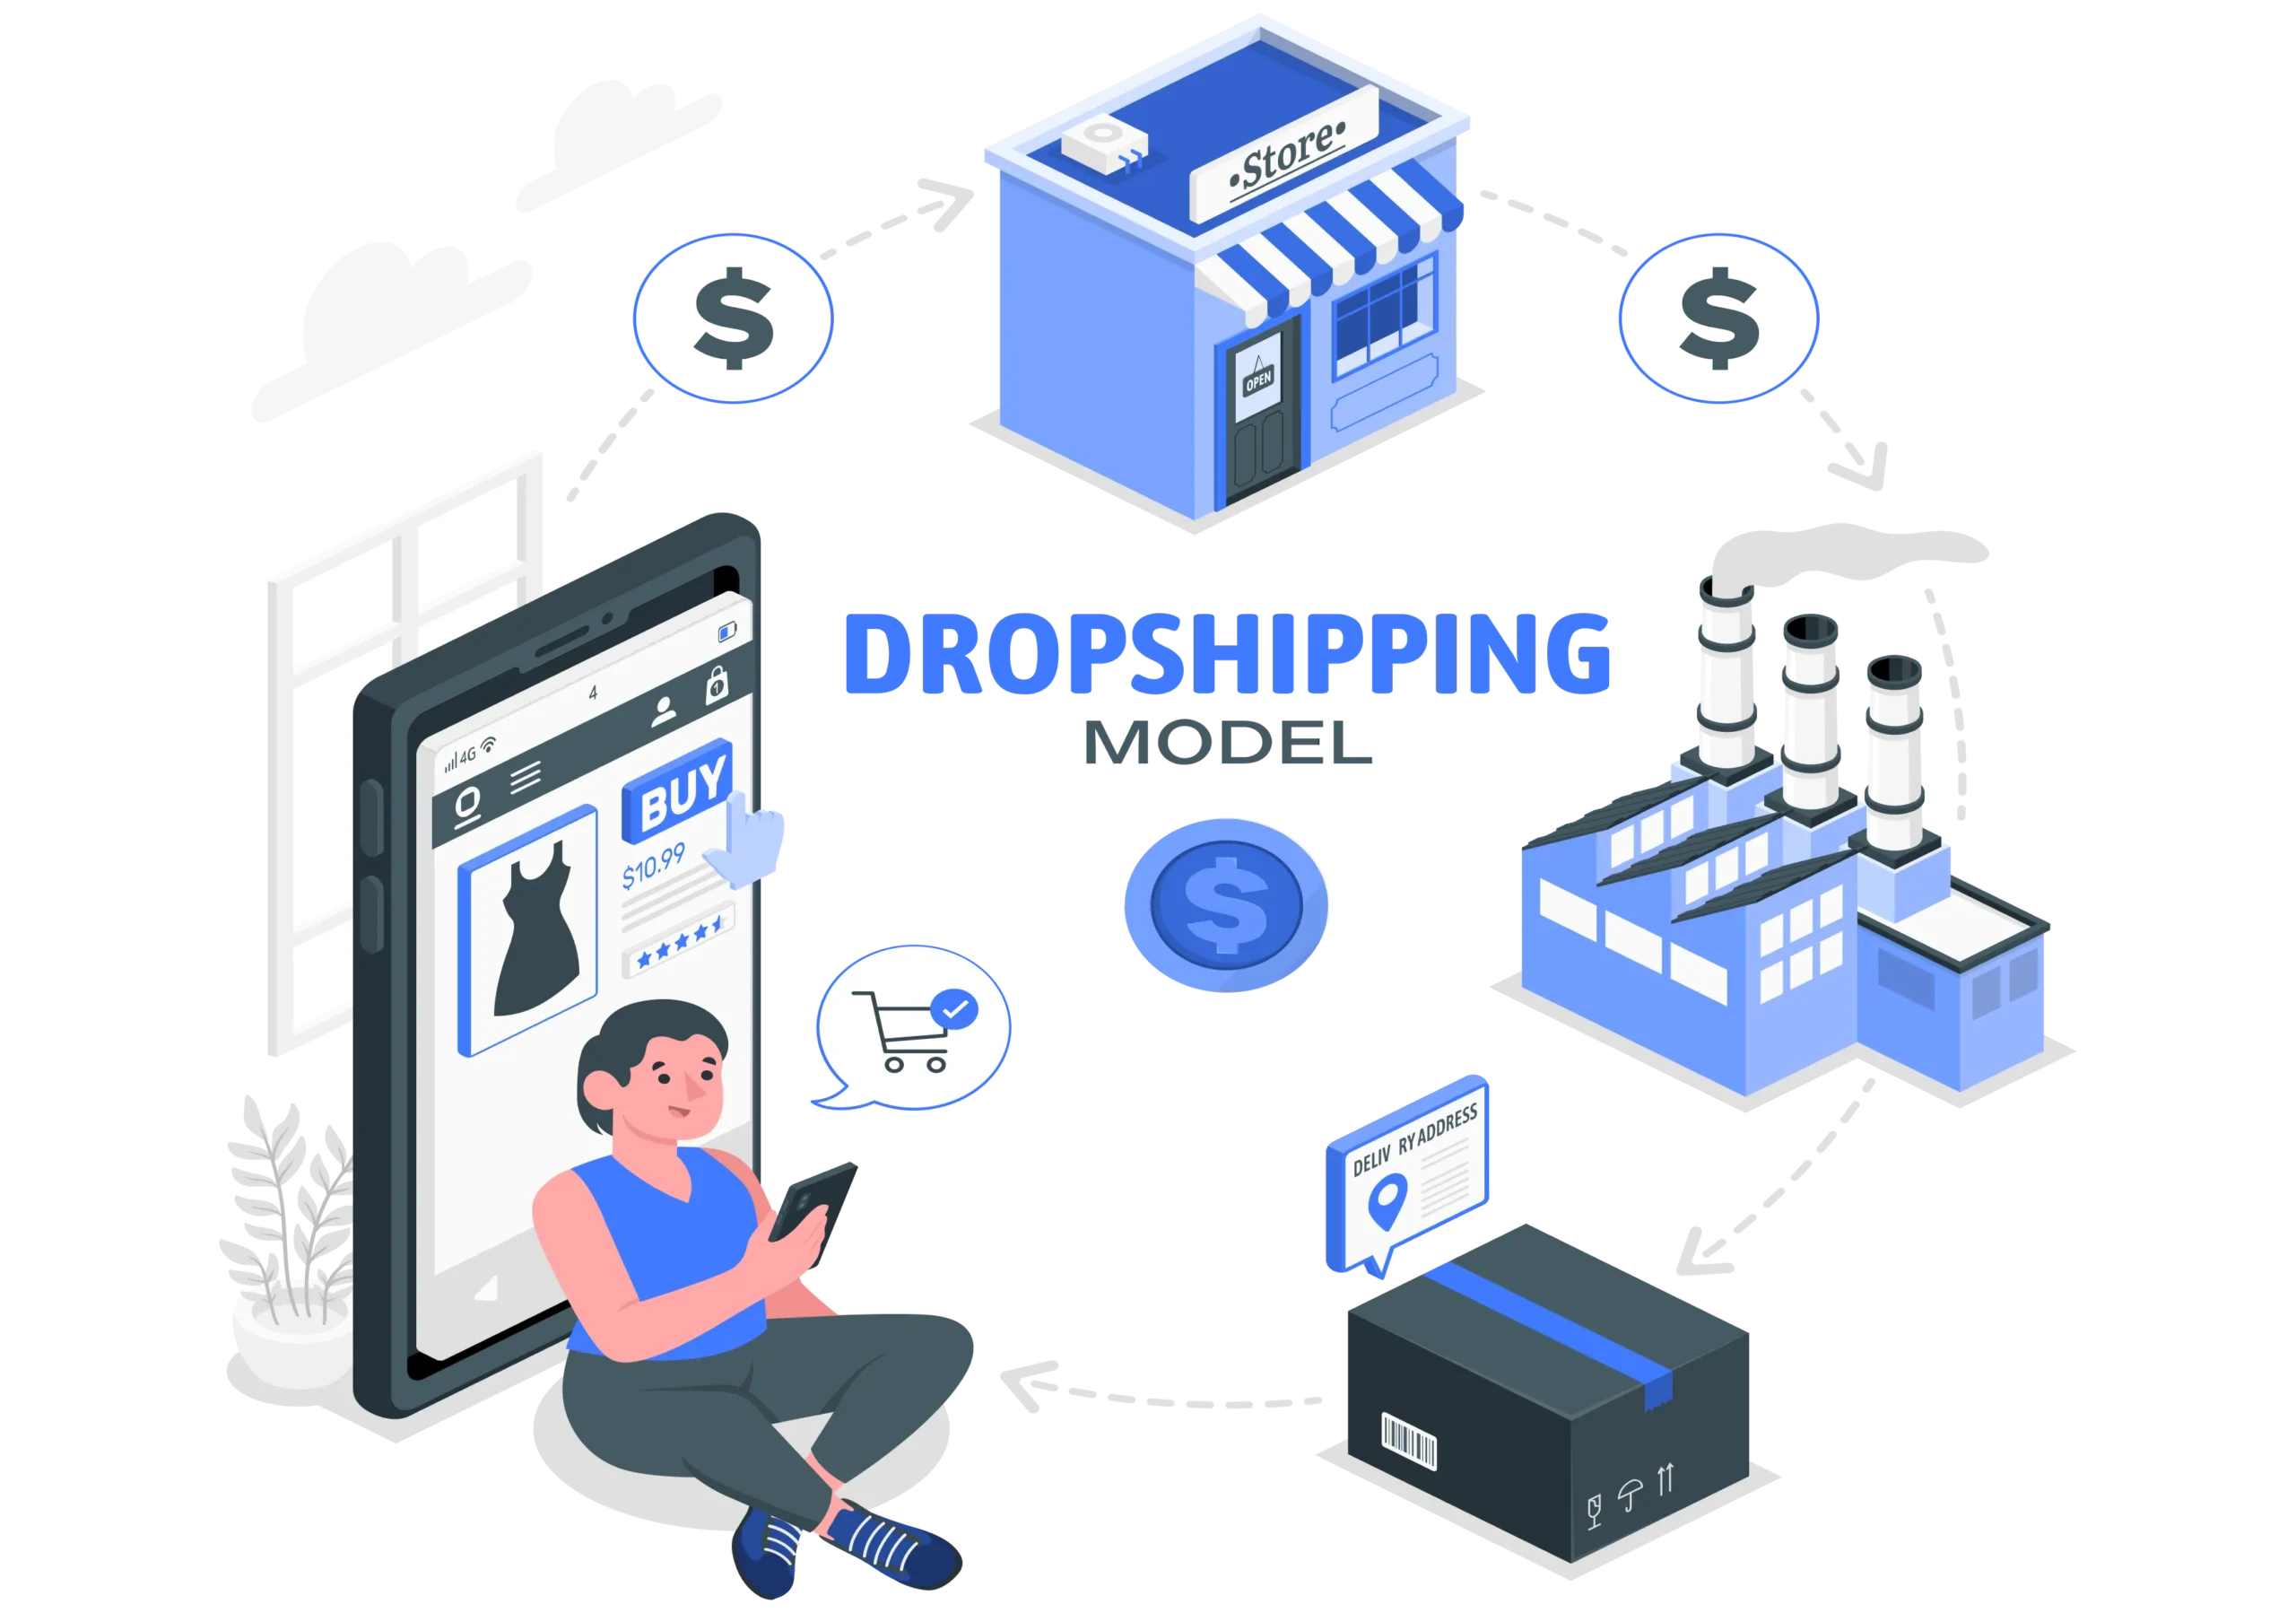 Dropshipping model